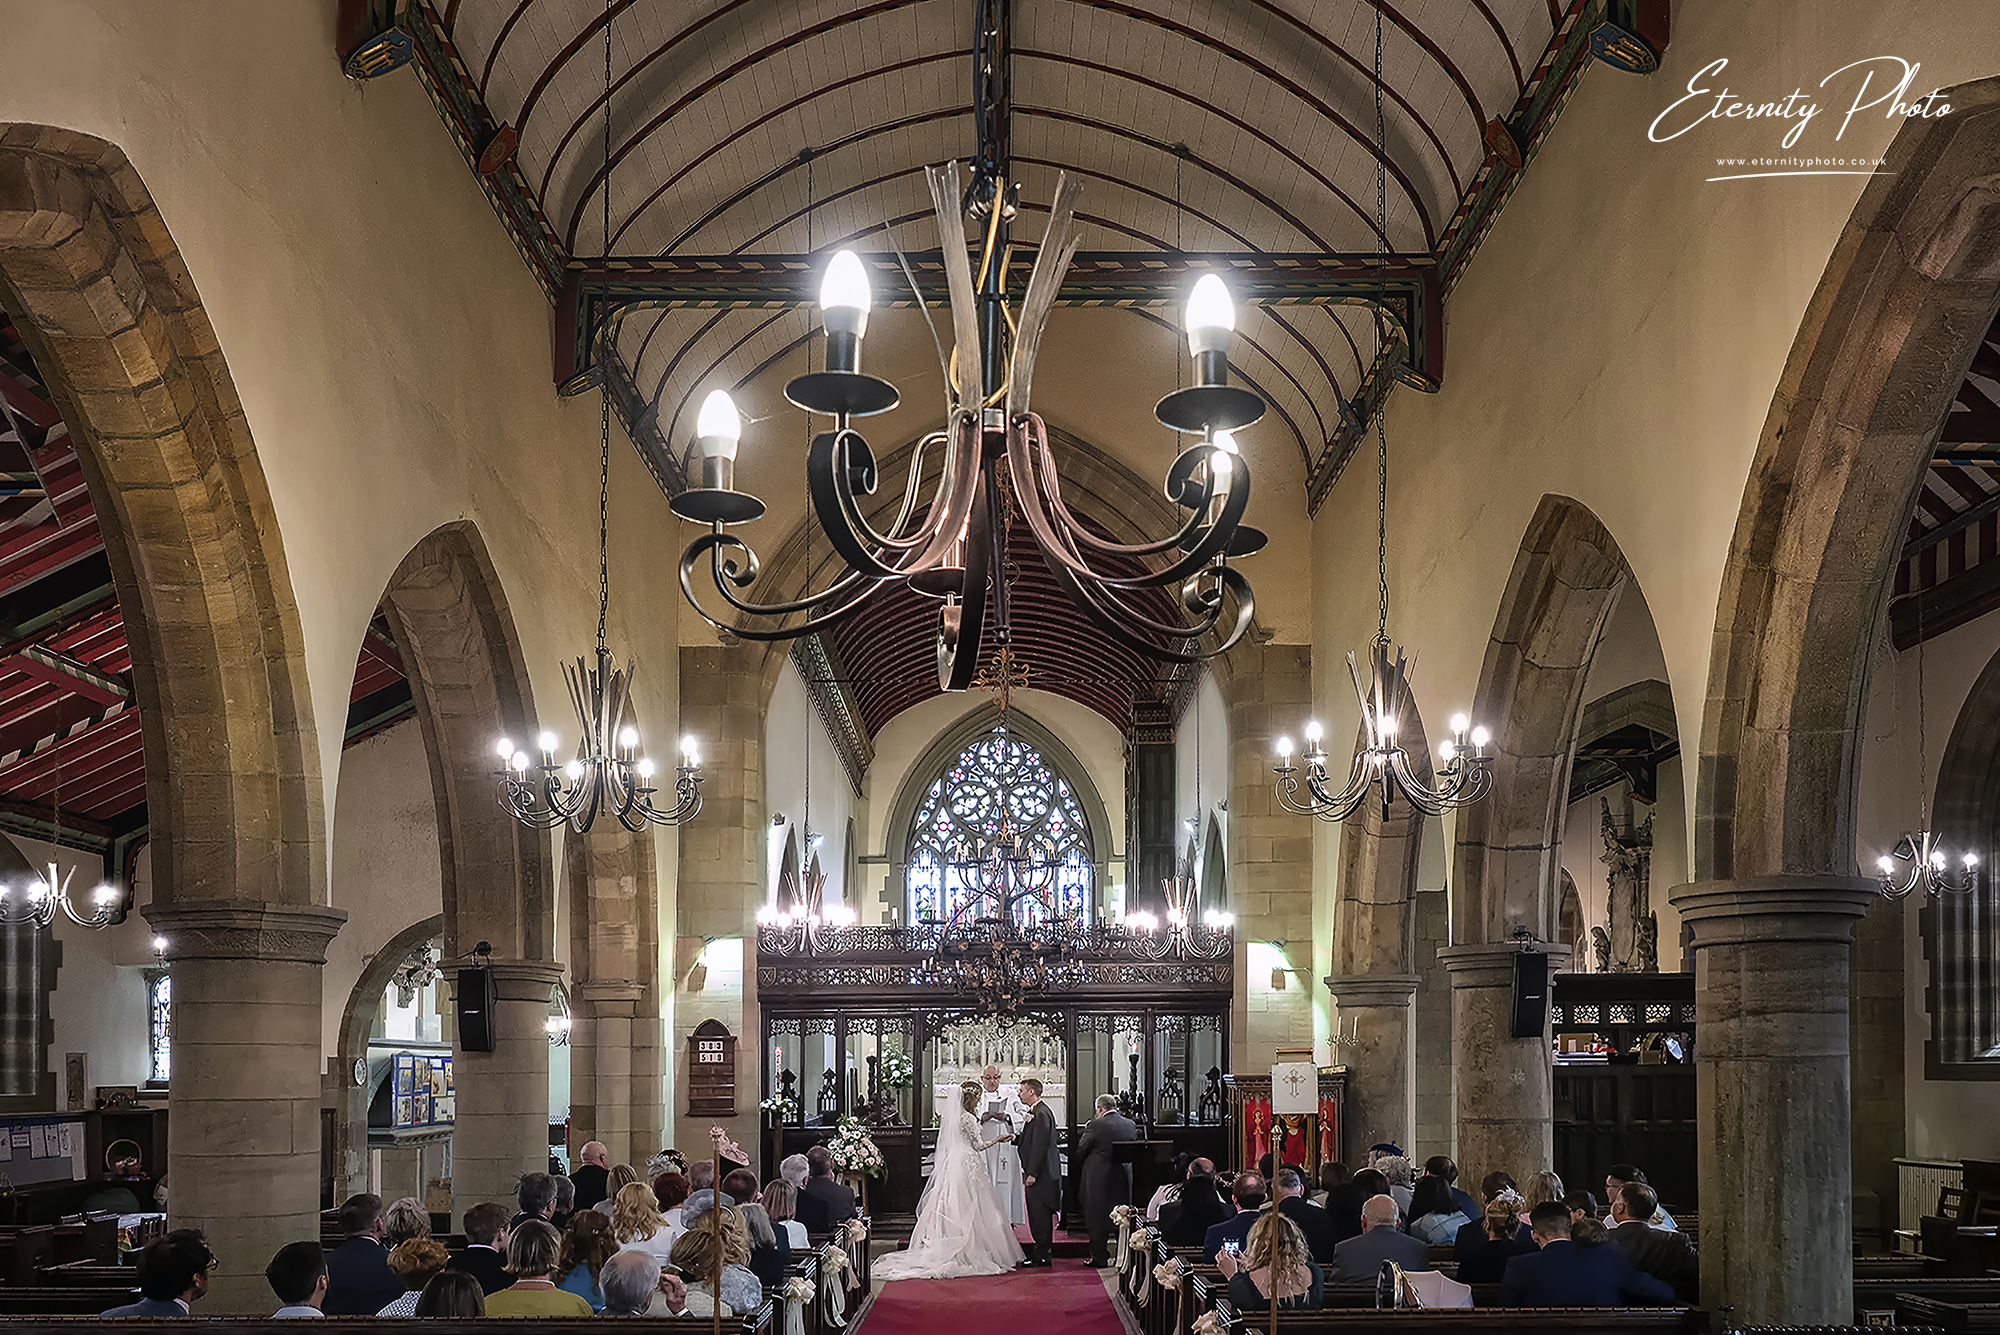 Wedding ceremony in traditional church interior.